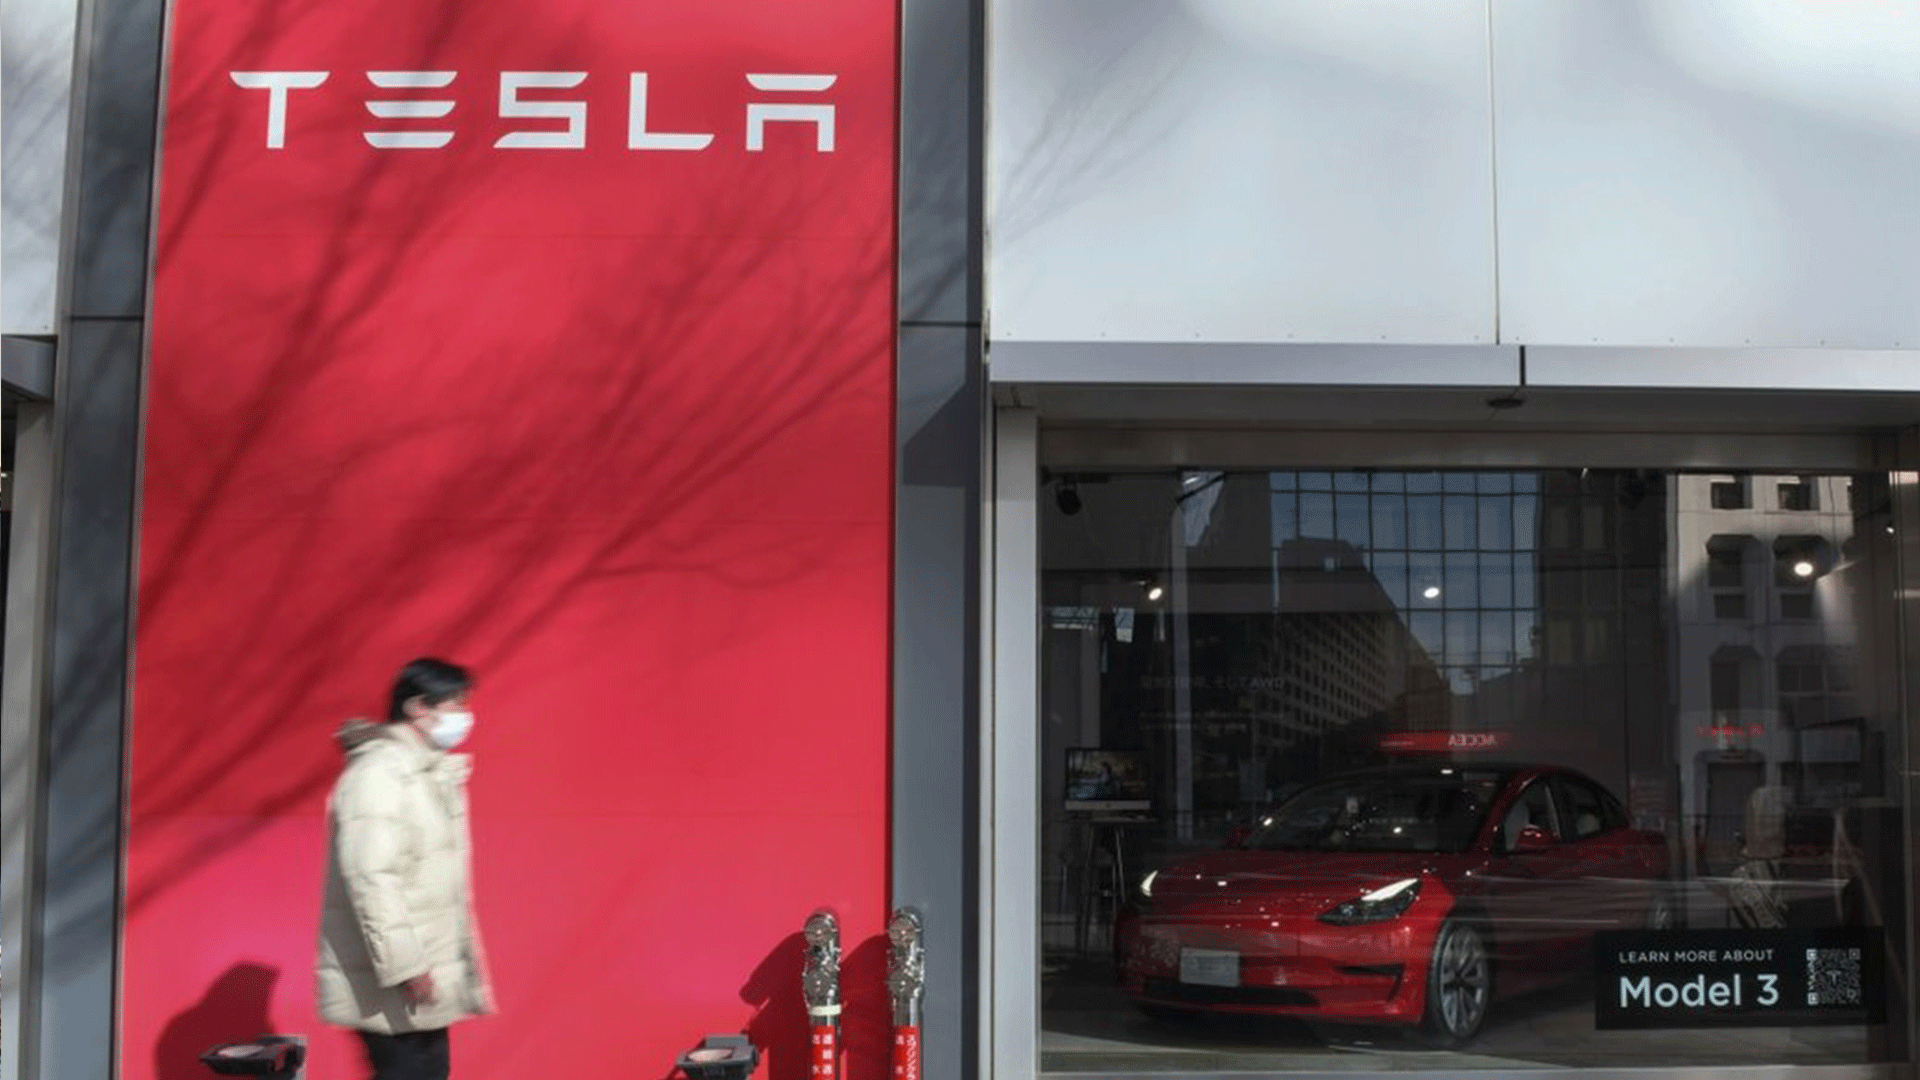  Tesla is the runaway leader in China’s premium electric car segment. Photo: Bloomberg